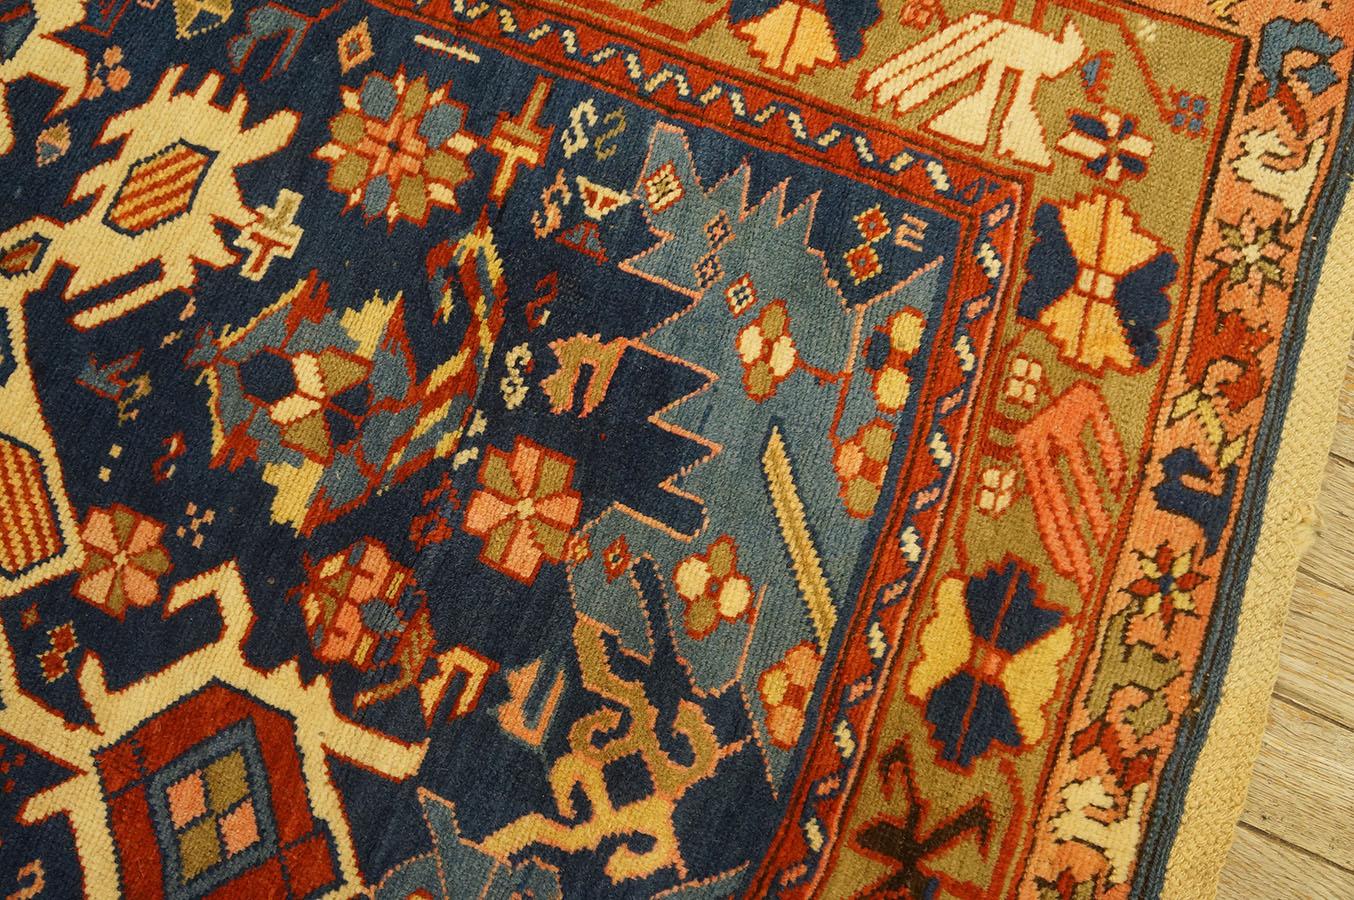 Late 19th Century Caucasian Bidjov Carpet ( 4'6'' x 5'8'' - 122 x 183 cm) For Sale 8